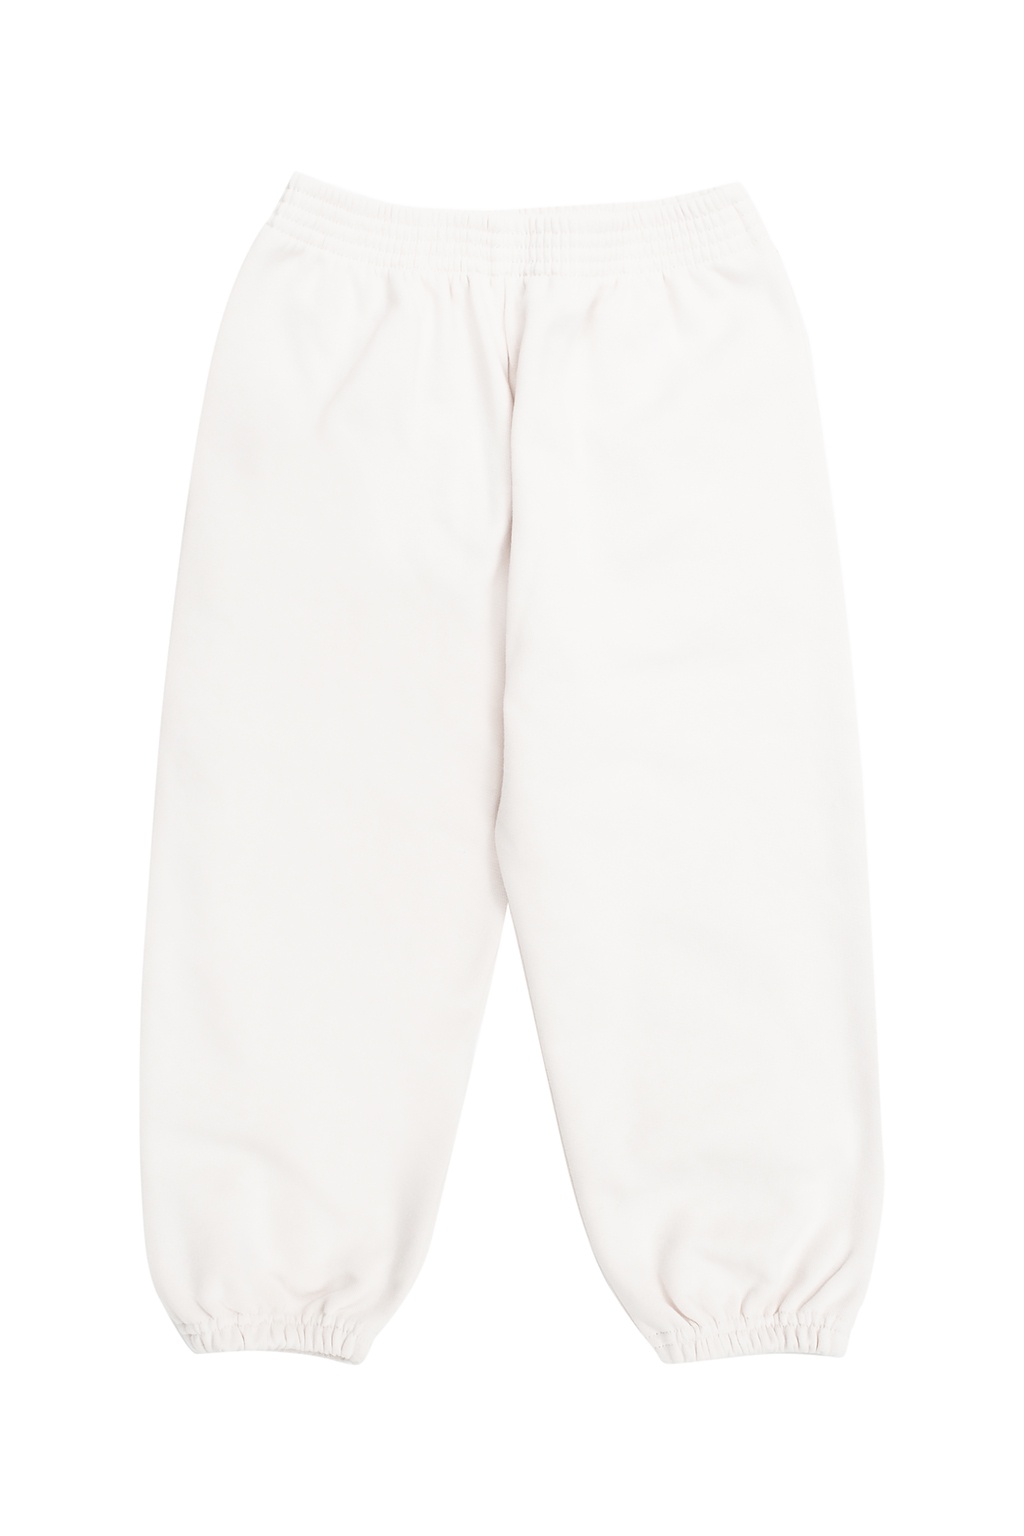 Balenciaga Kids button-front shirt dress White